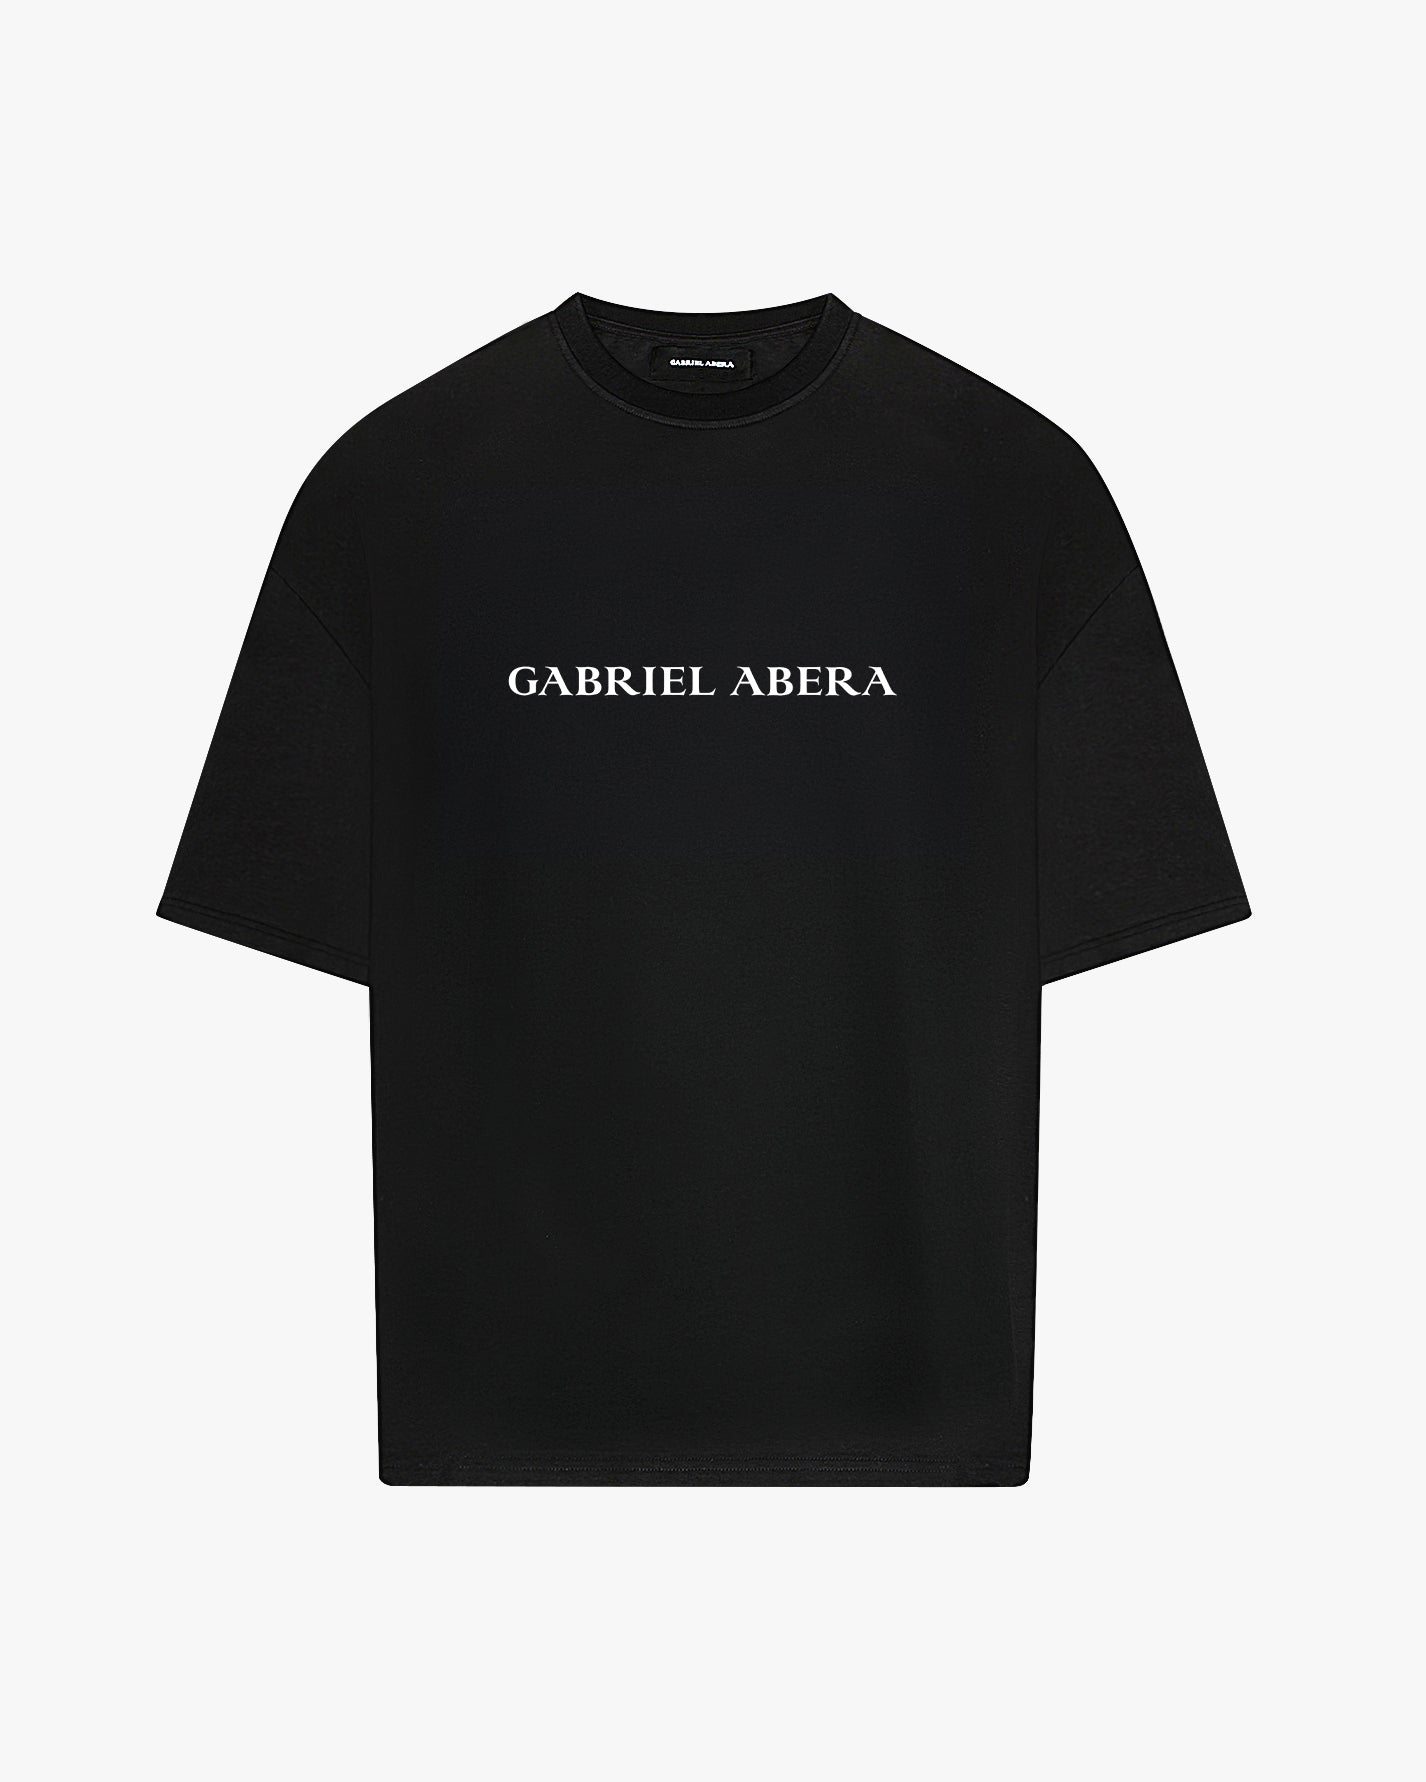 GABRIEL ABRA T-SHIRT - BLACK